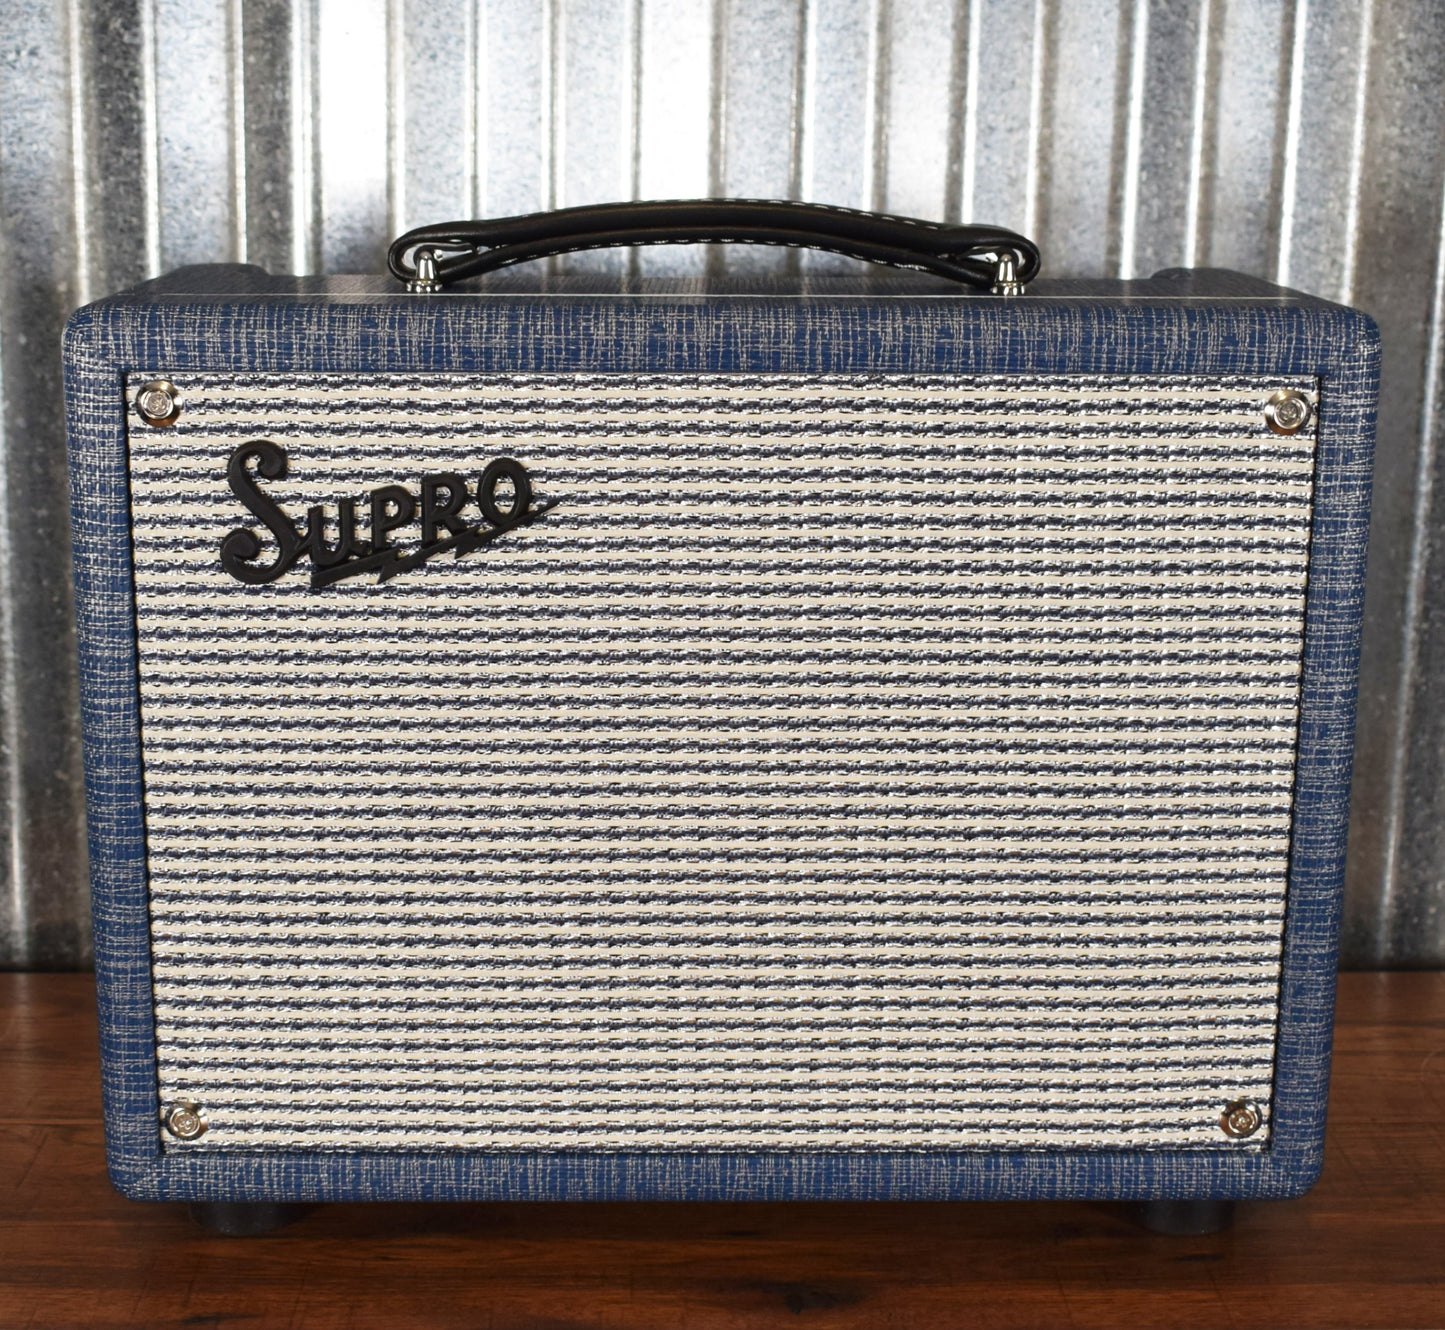 Supro 1606 Super 8" 5 Watt All Tube Guitar Amplifier Combo